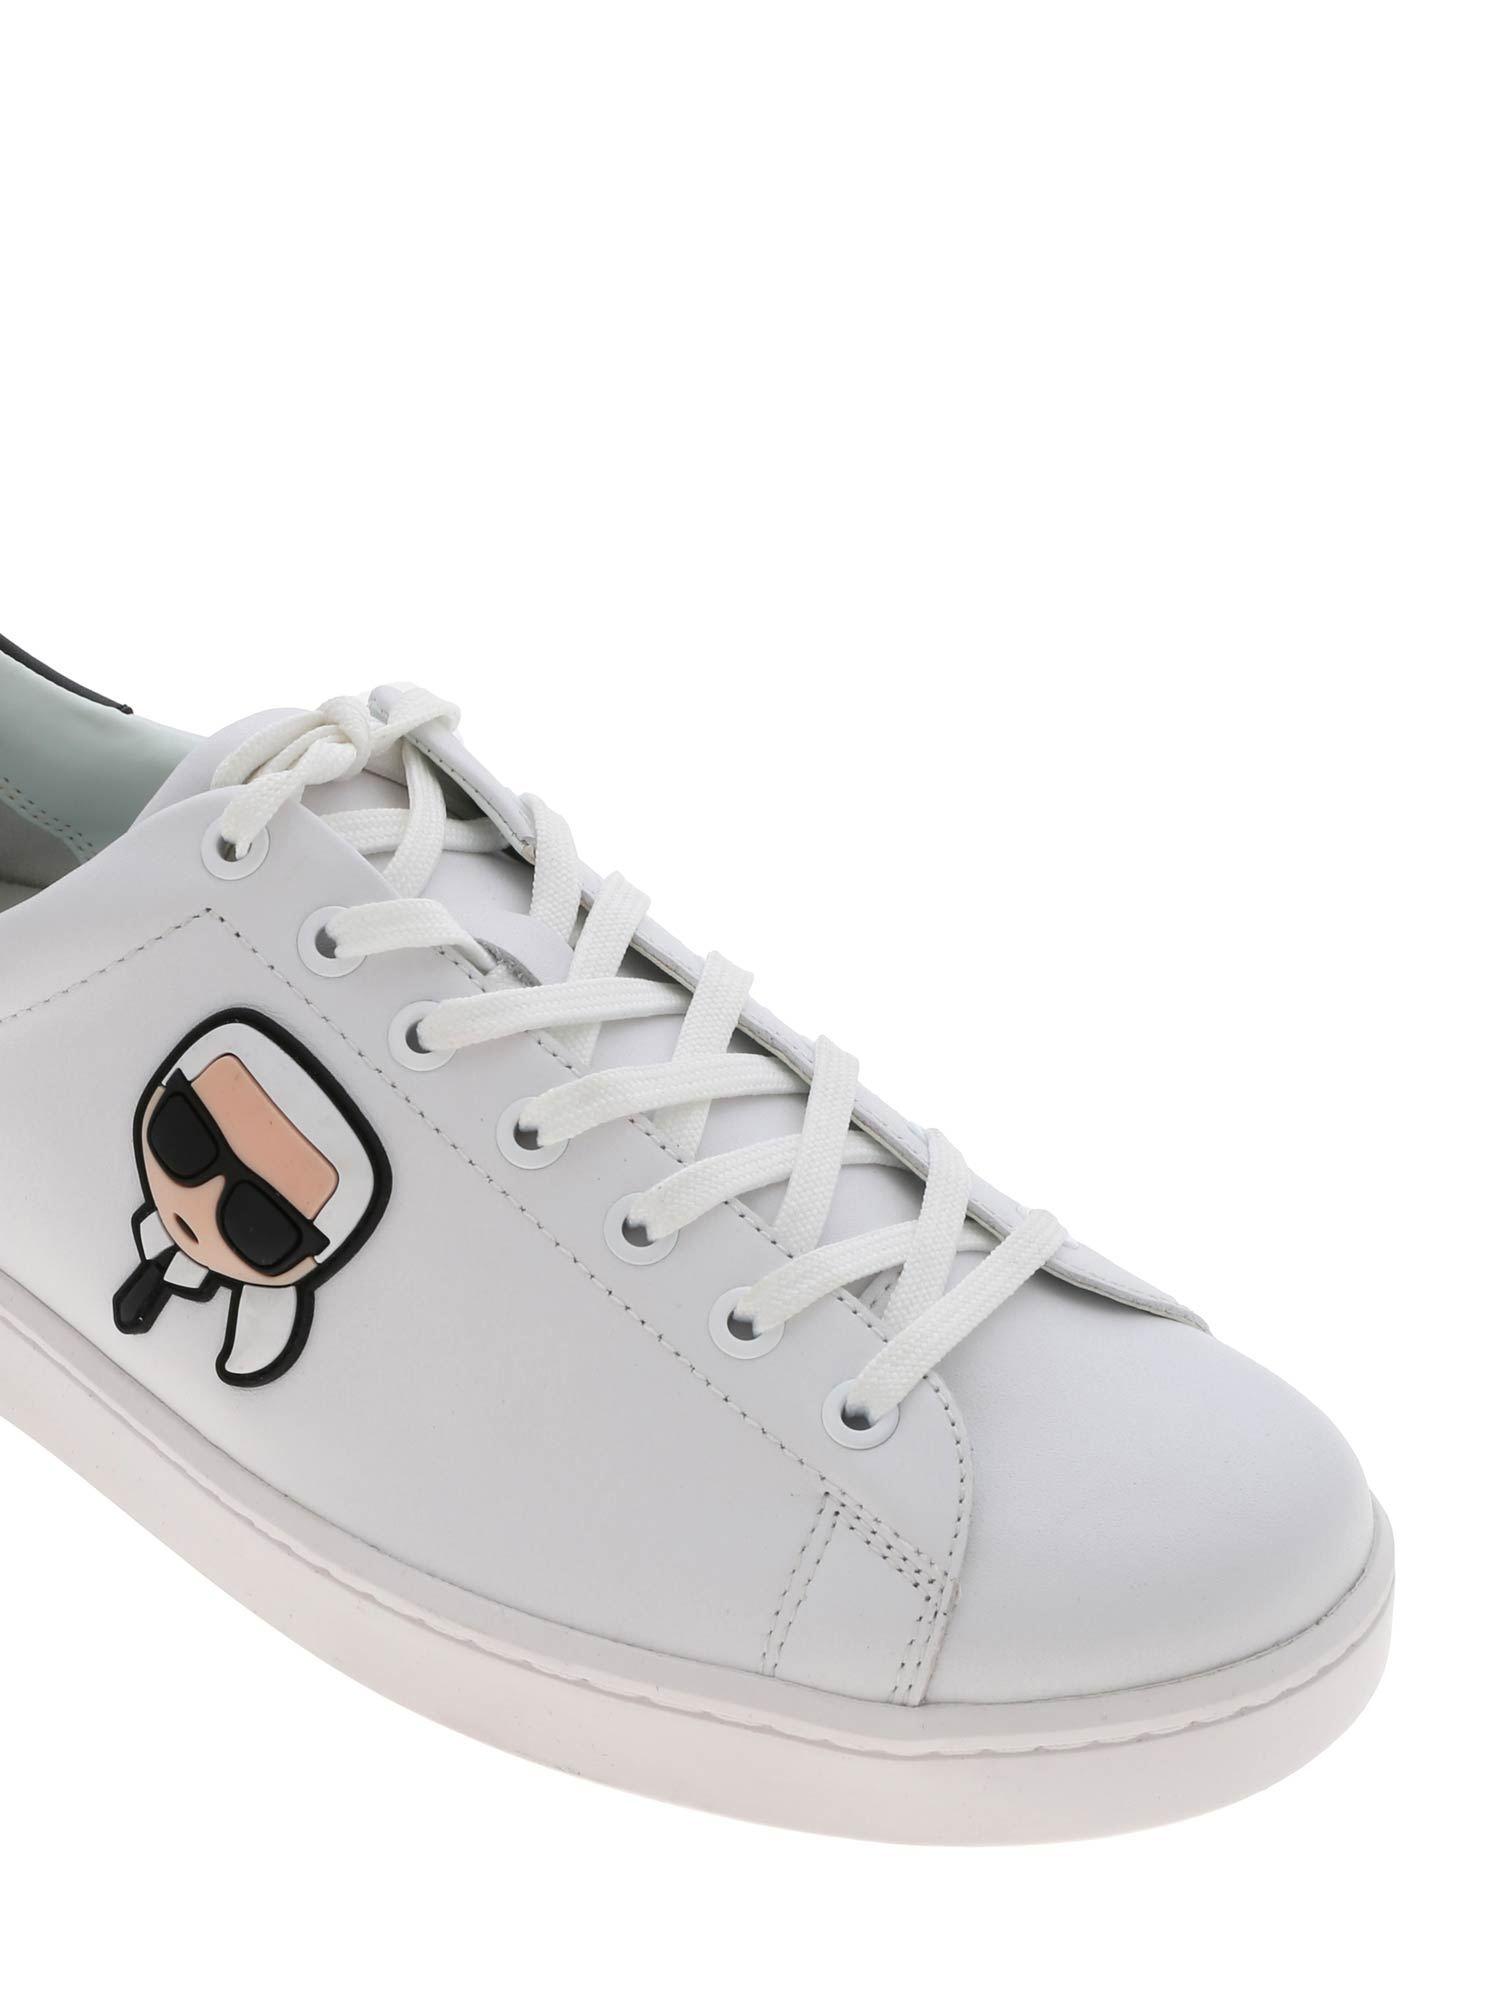 Karl Lagerfeld Lace Kapri Mens Karl Ikonik 3d Sneakers in White/Black ...